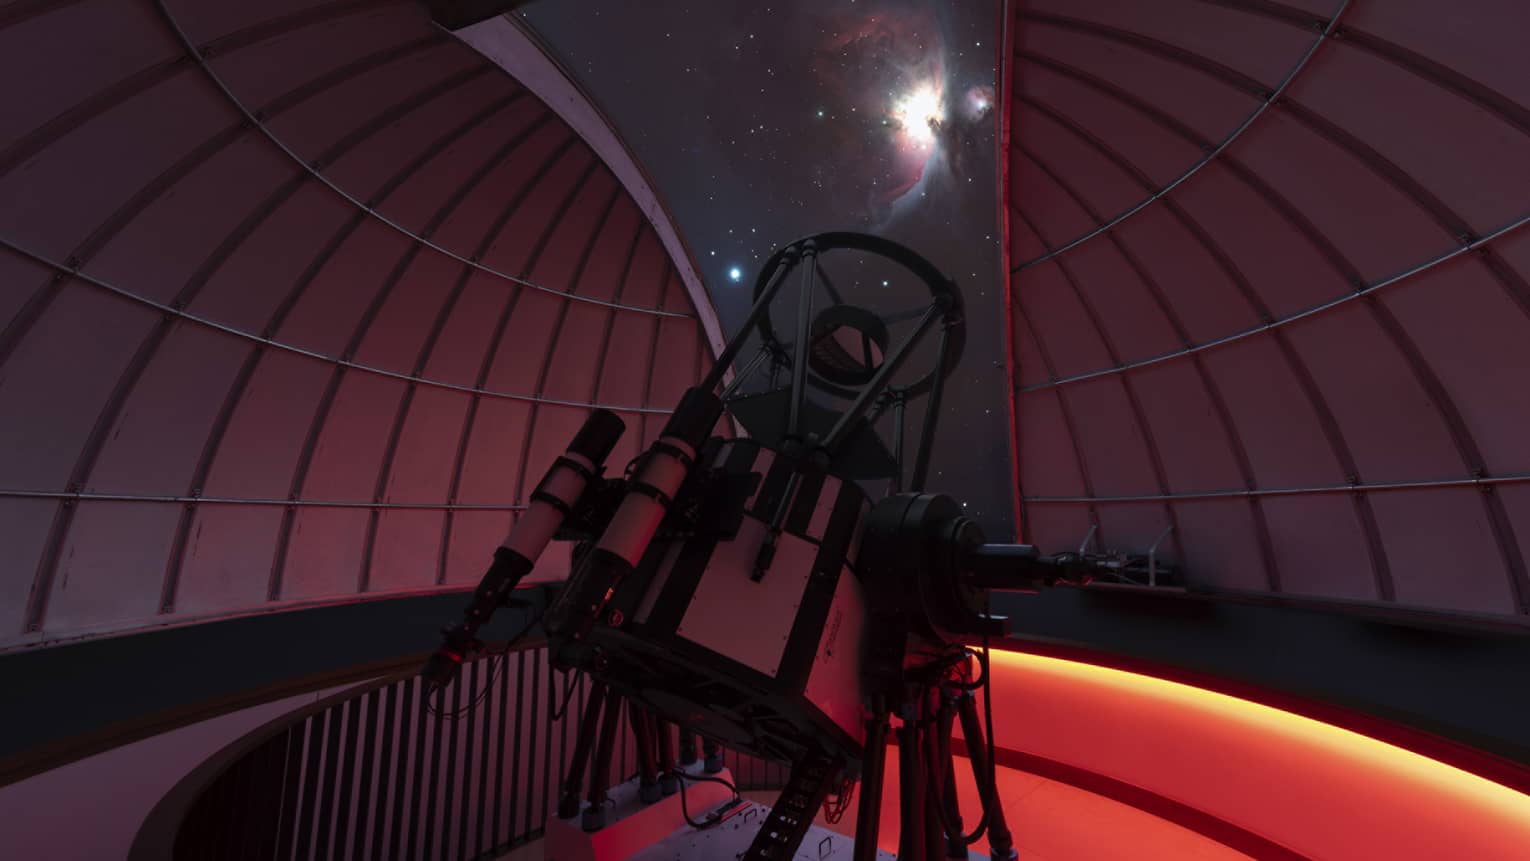 Lanai Observatory